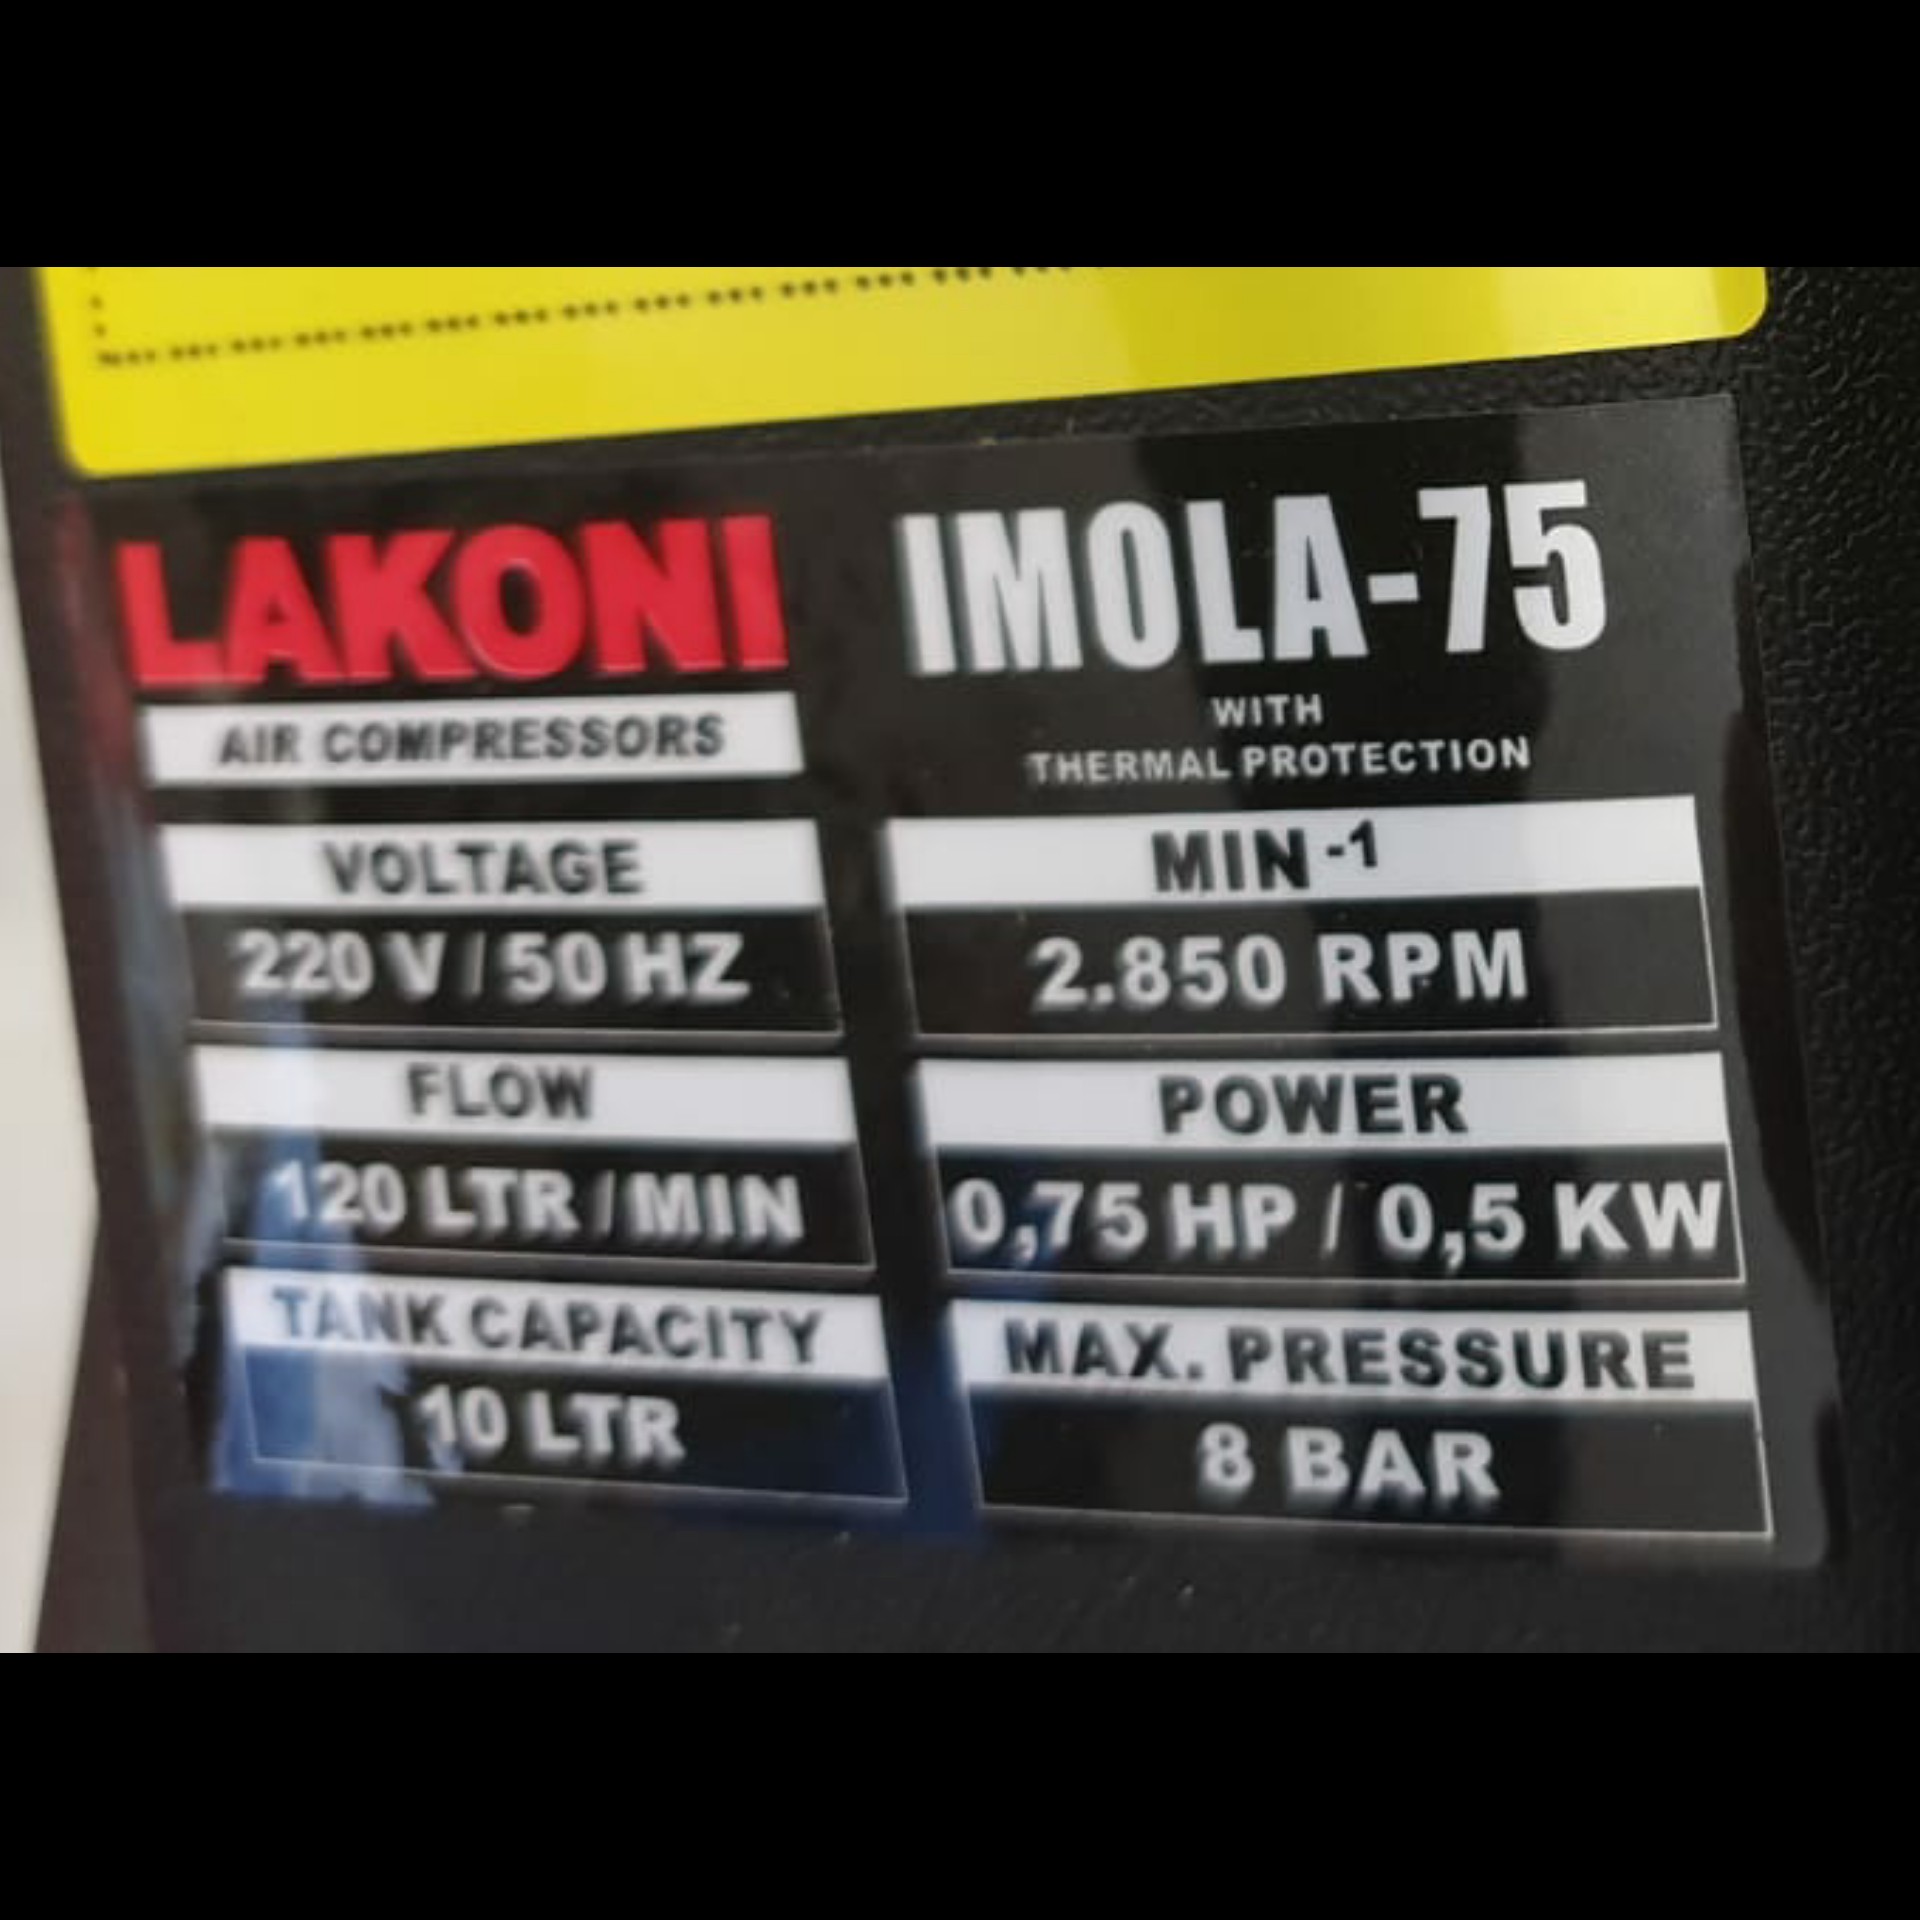 Air Compressor Lakoni Imola-75 5